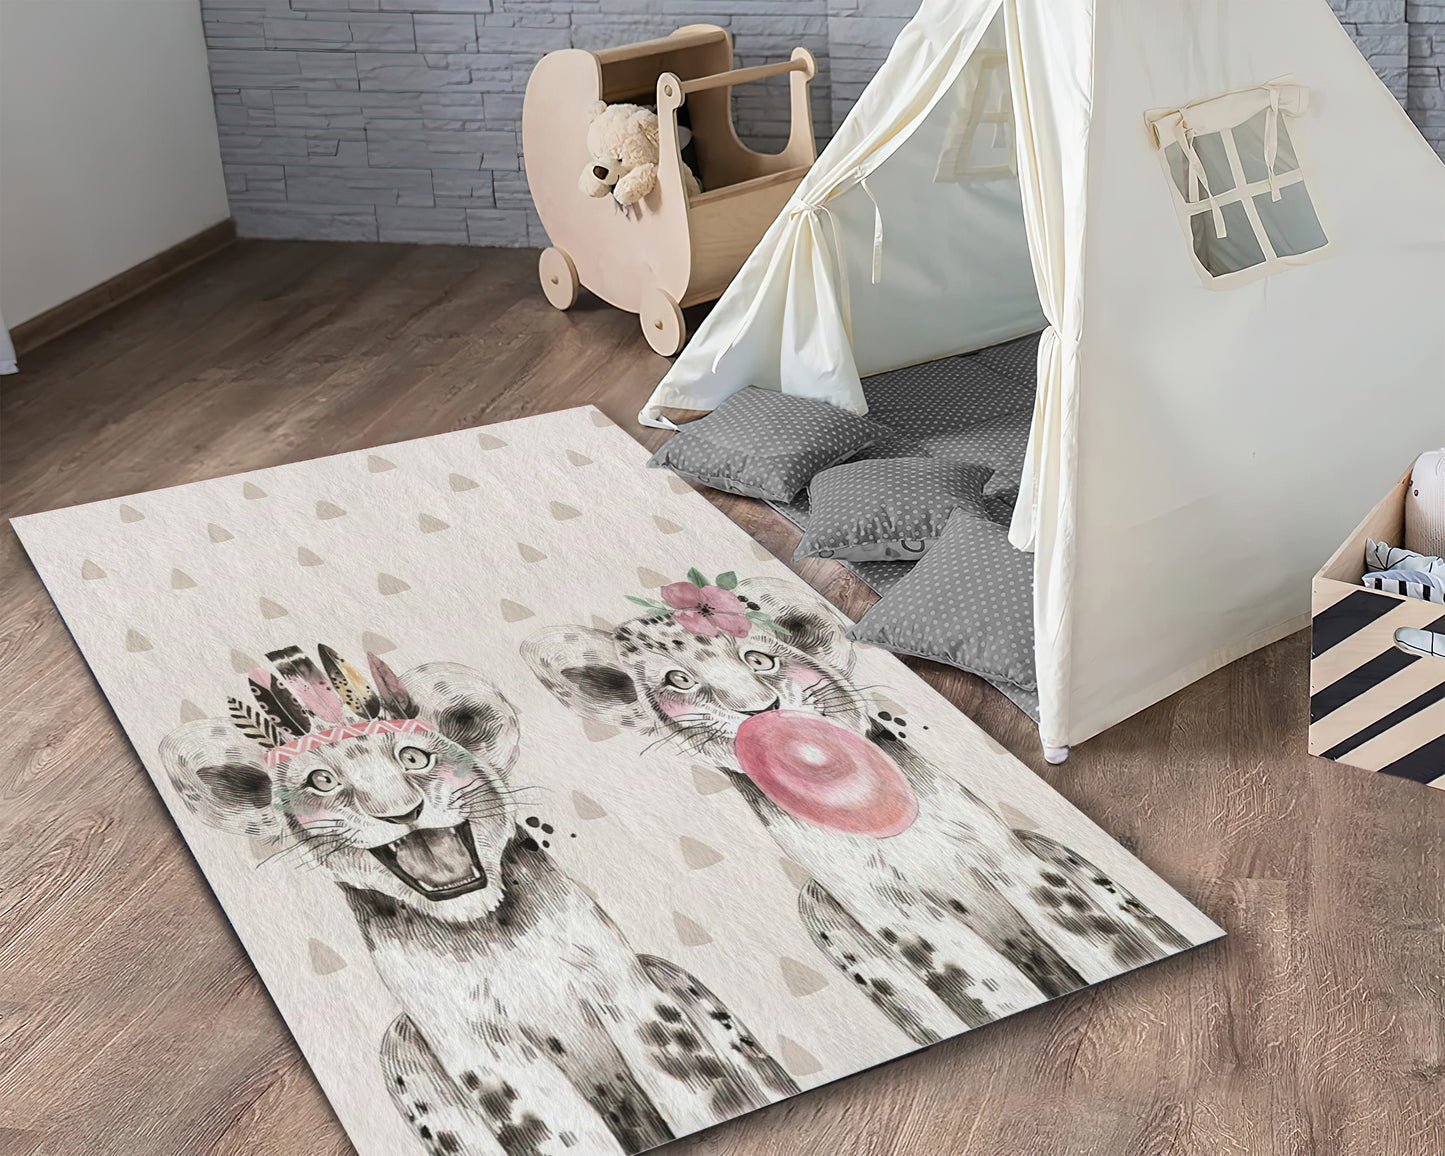 Baby Tiger Rug, Baby Room Carpet, Animal Themed Nursery Mat, Kids Room Decor, Baby Gift